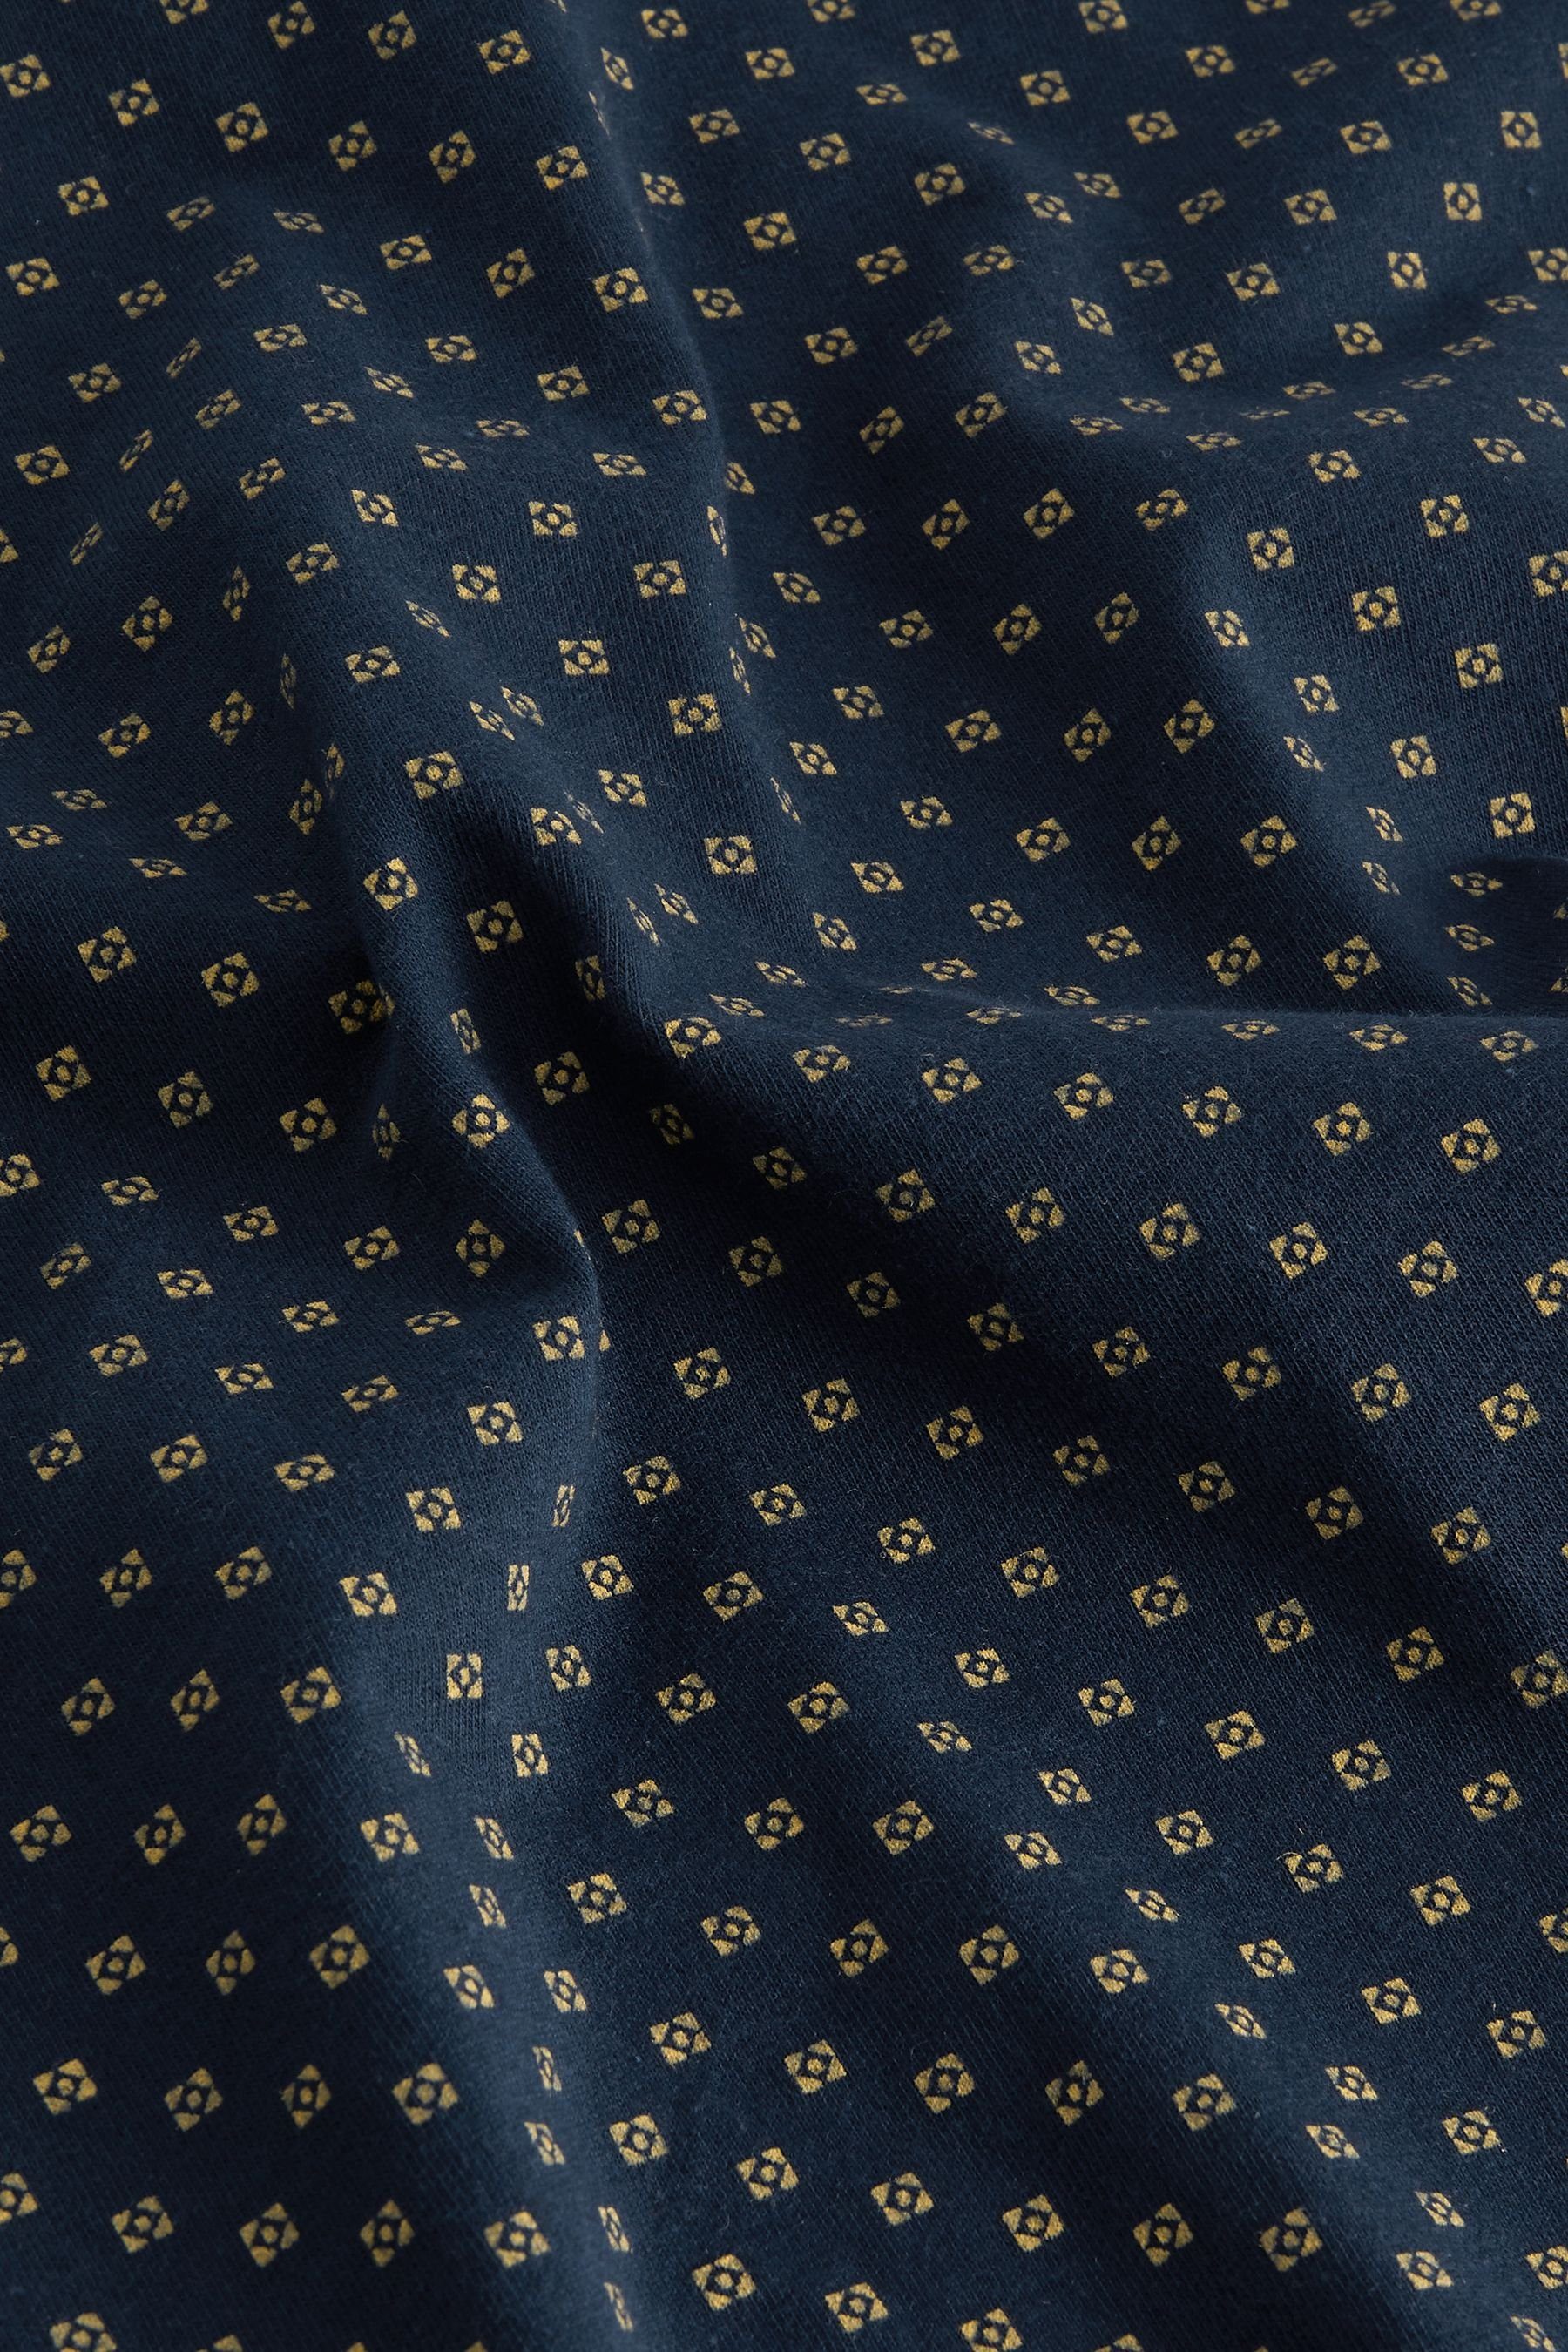 Next Poloshirt Poloshirts (3-tlg) im White/Black/Navy aus Jersey 3er-Pack Blue Geo Print